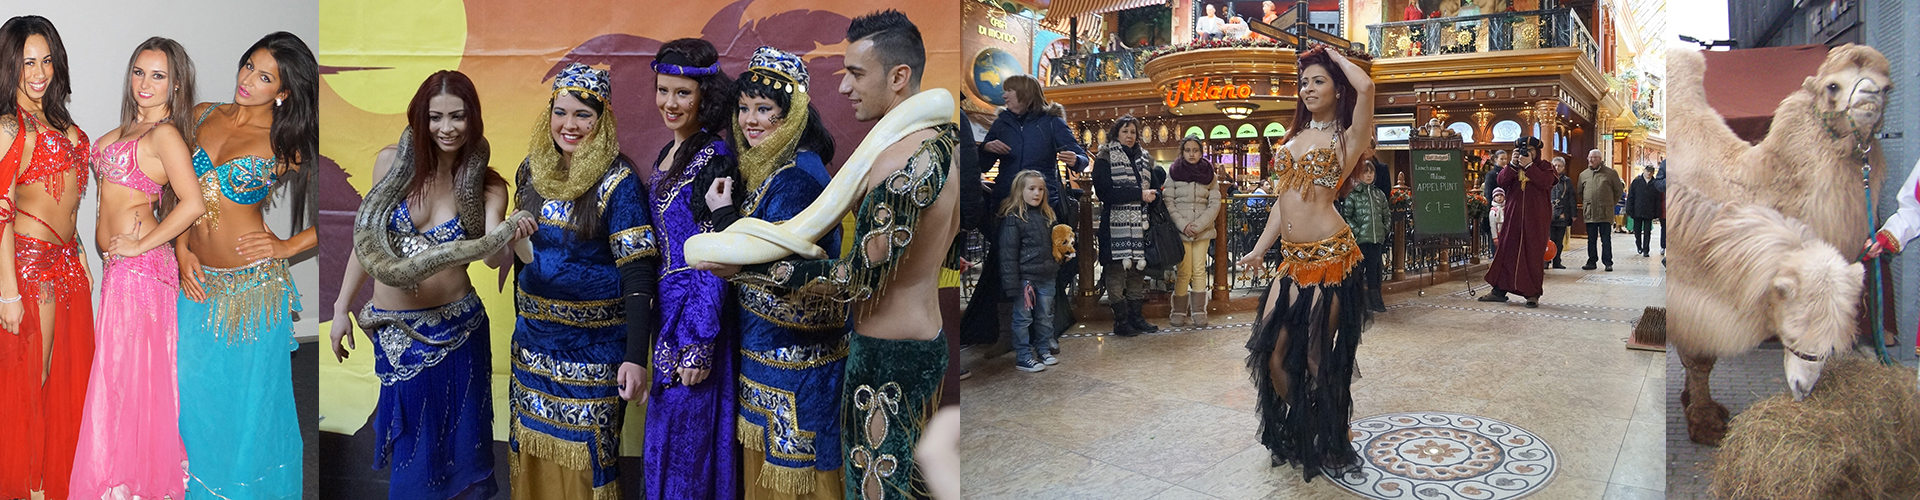 Aladin Themafeest